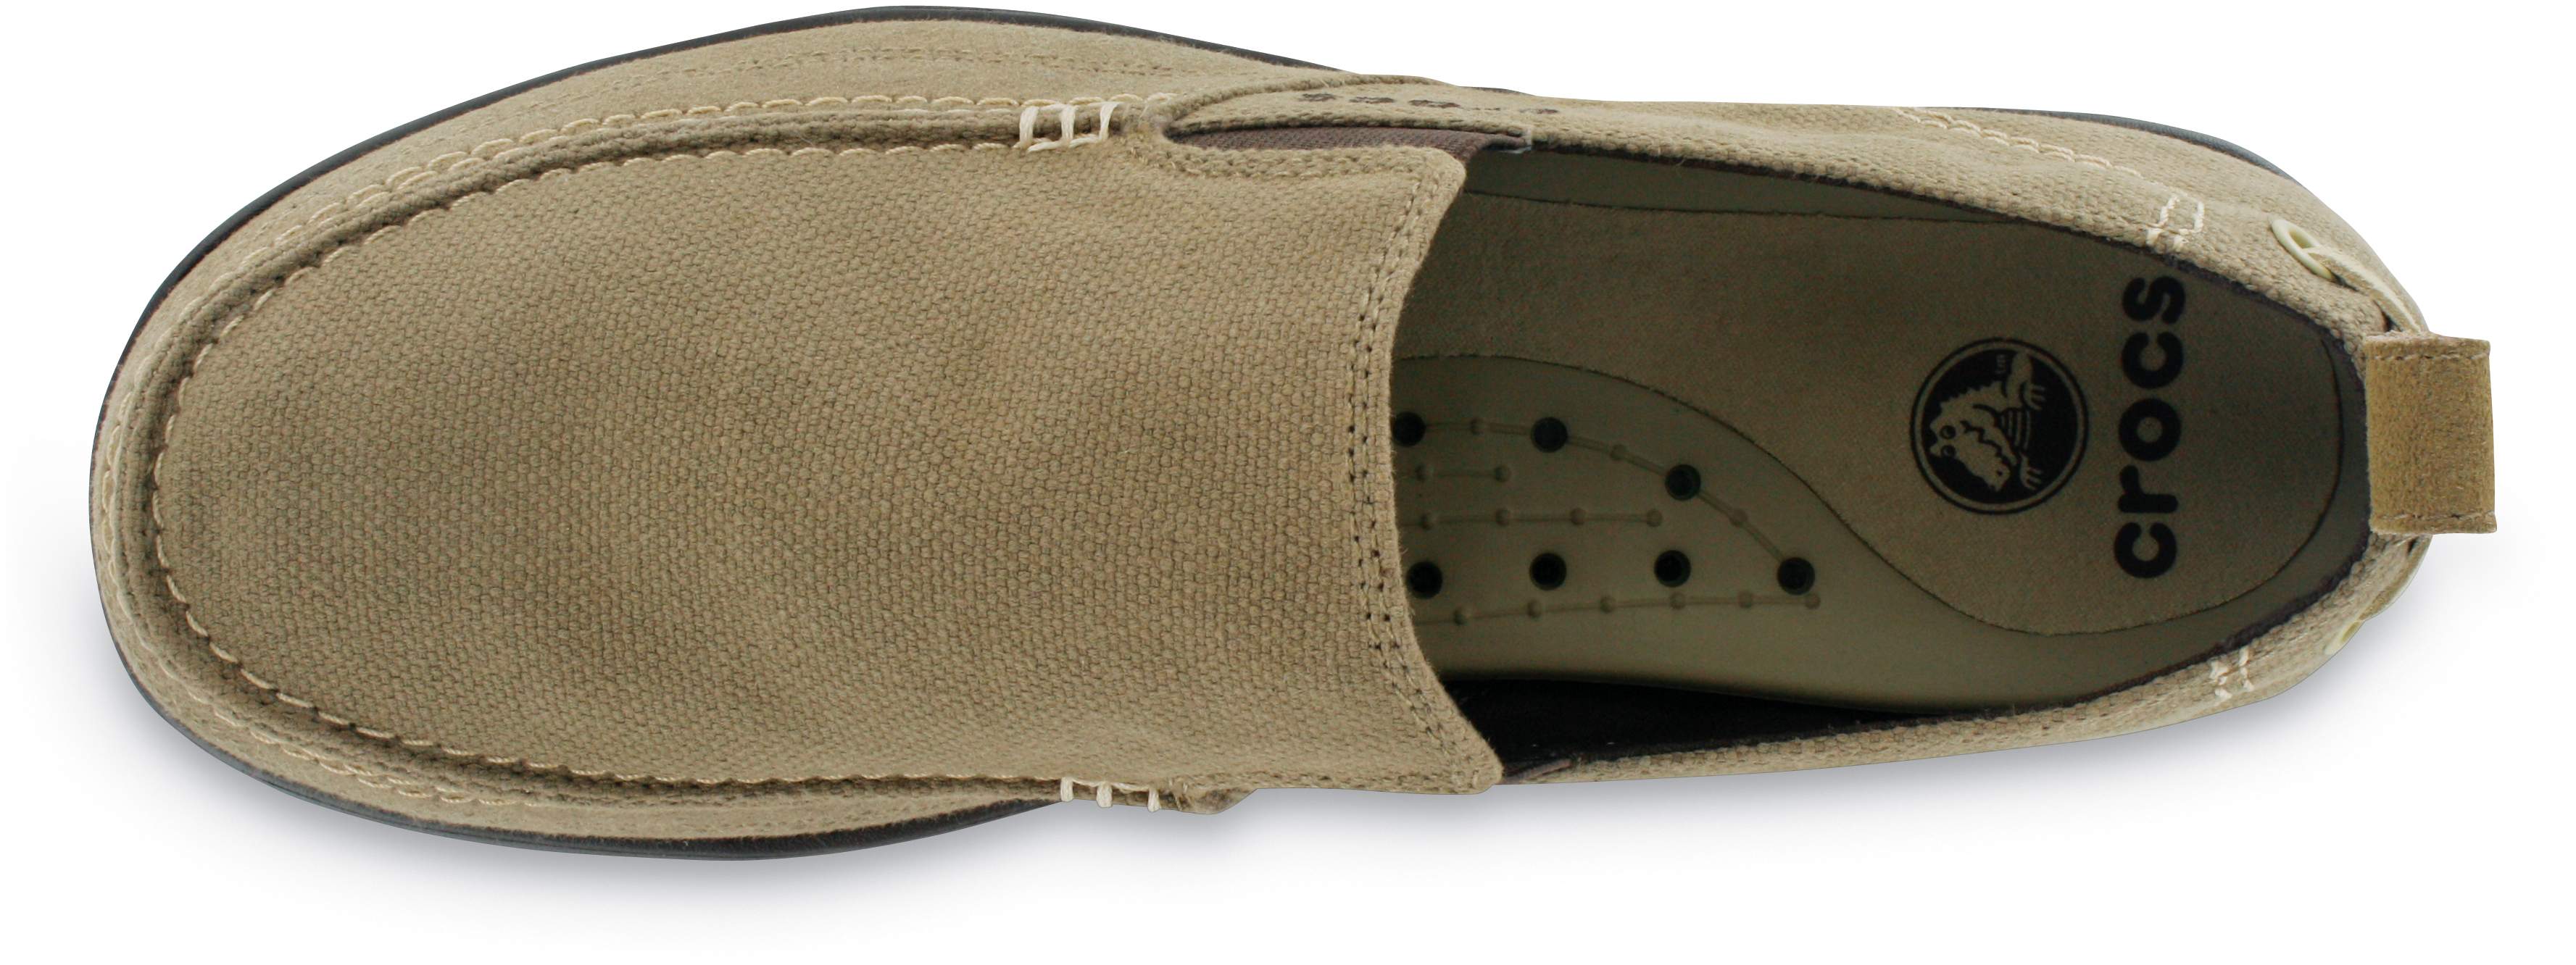 crocs maternity walu canvas loafer shoes slip on